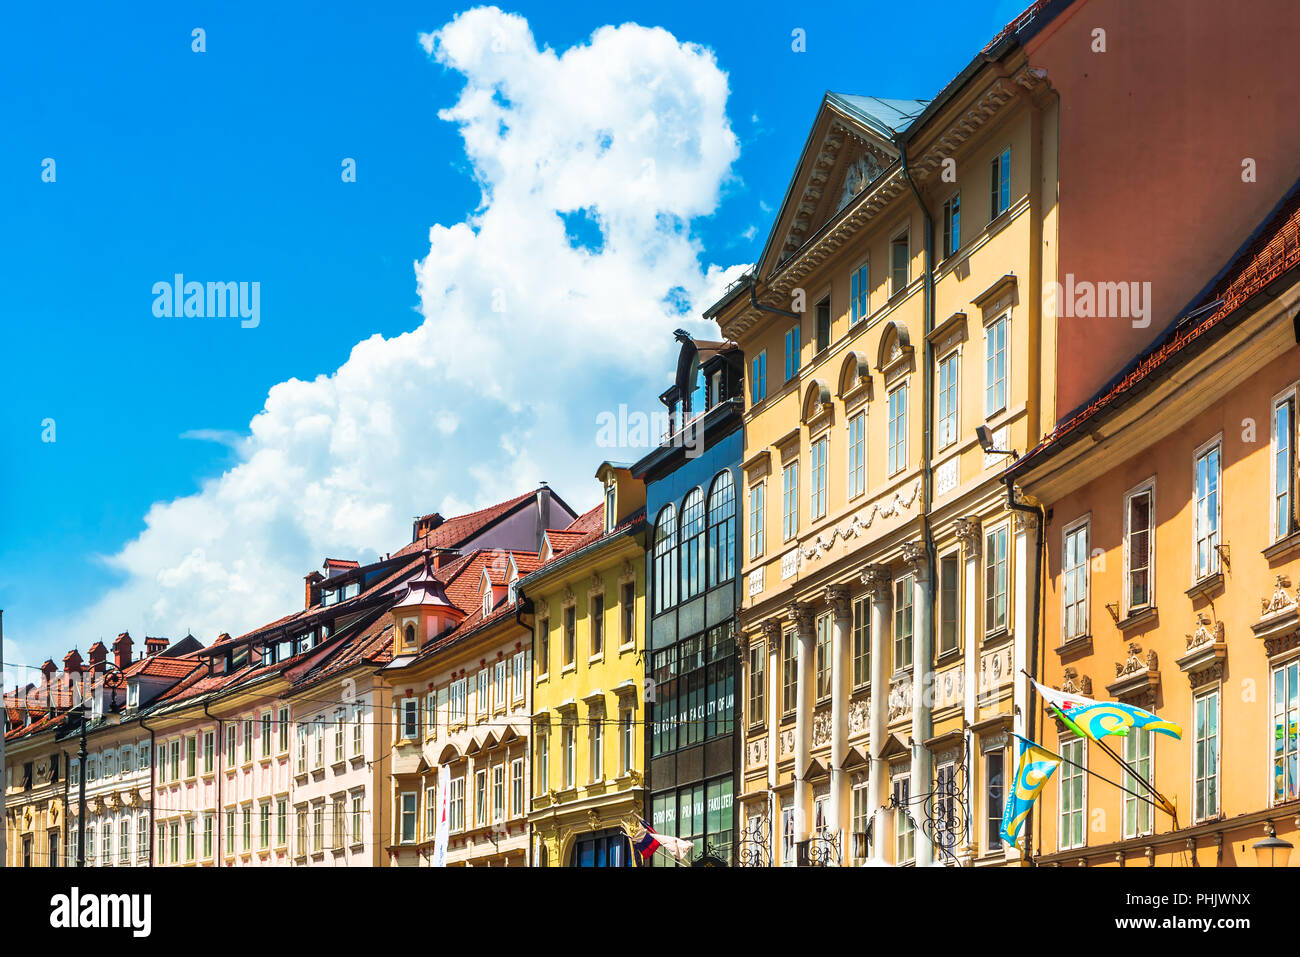 Coloridos edificios históricos del casco antiguo de Liubliana - Eslovenia Foto de stock